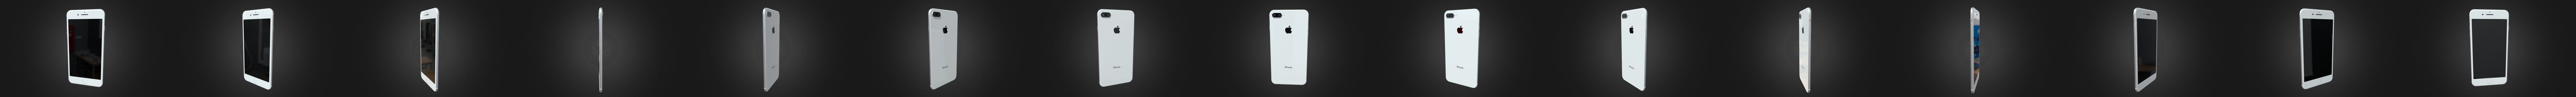 1,656 Apple Iphone 8 Plus Images, Stock Photos, 3D objects, & Vectors